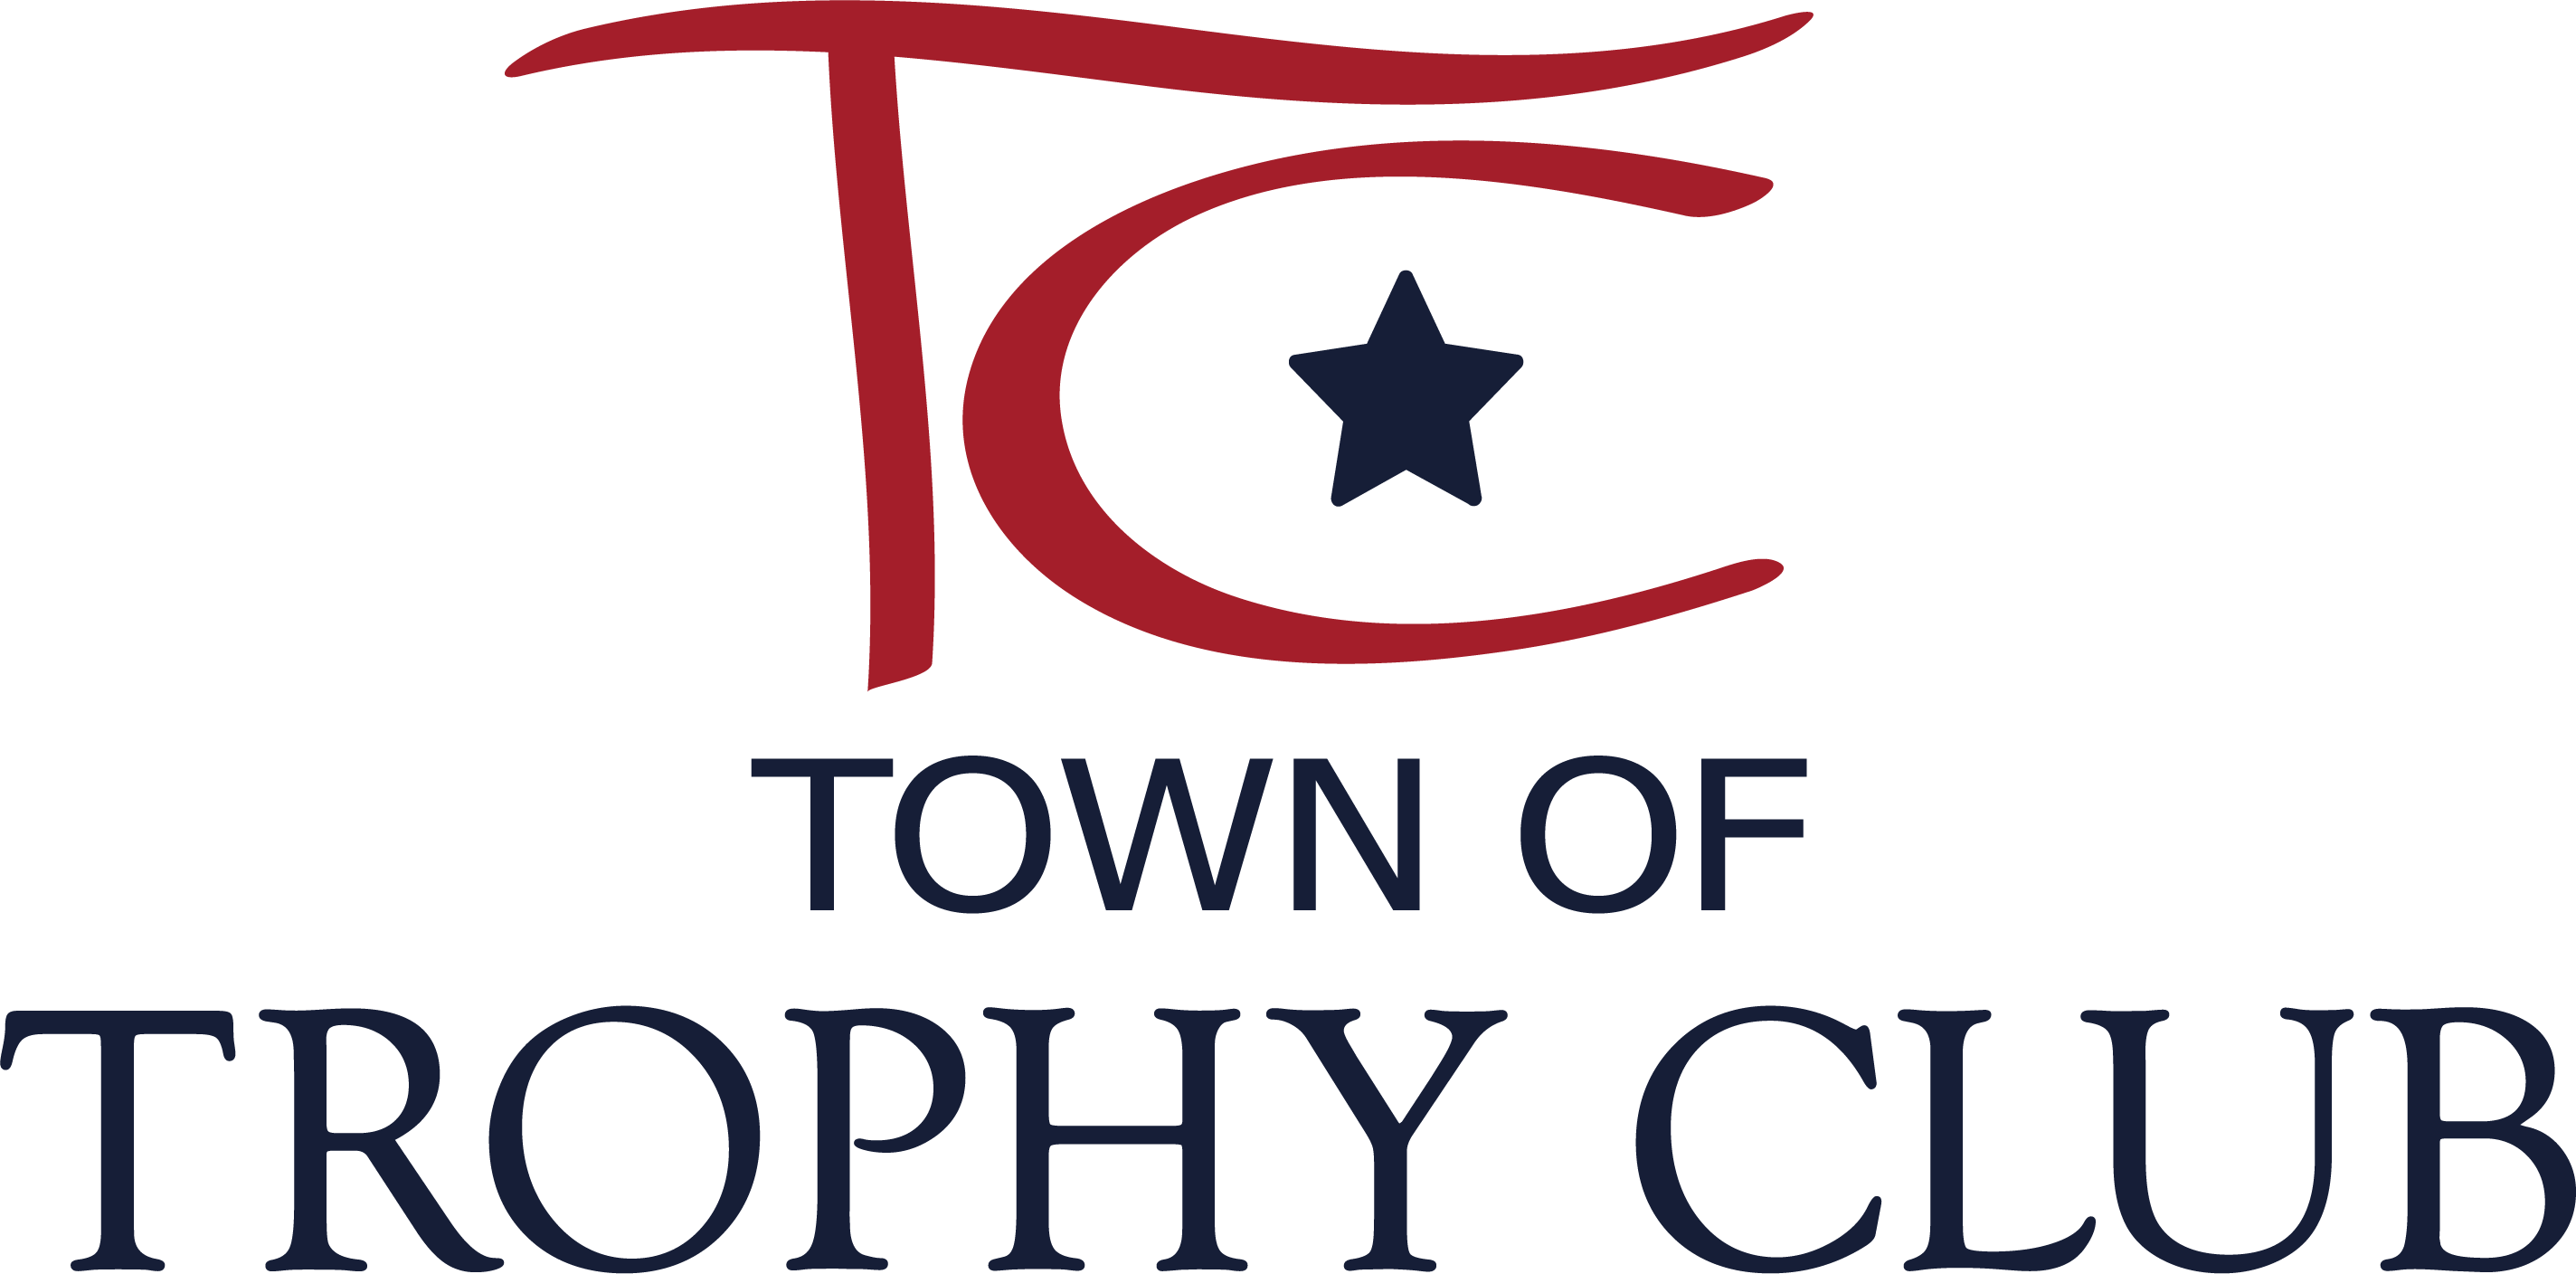 Trophy Club, Texas - Official Seal or Logo